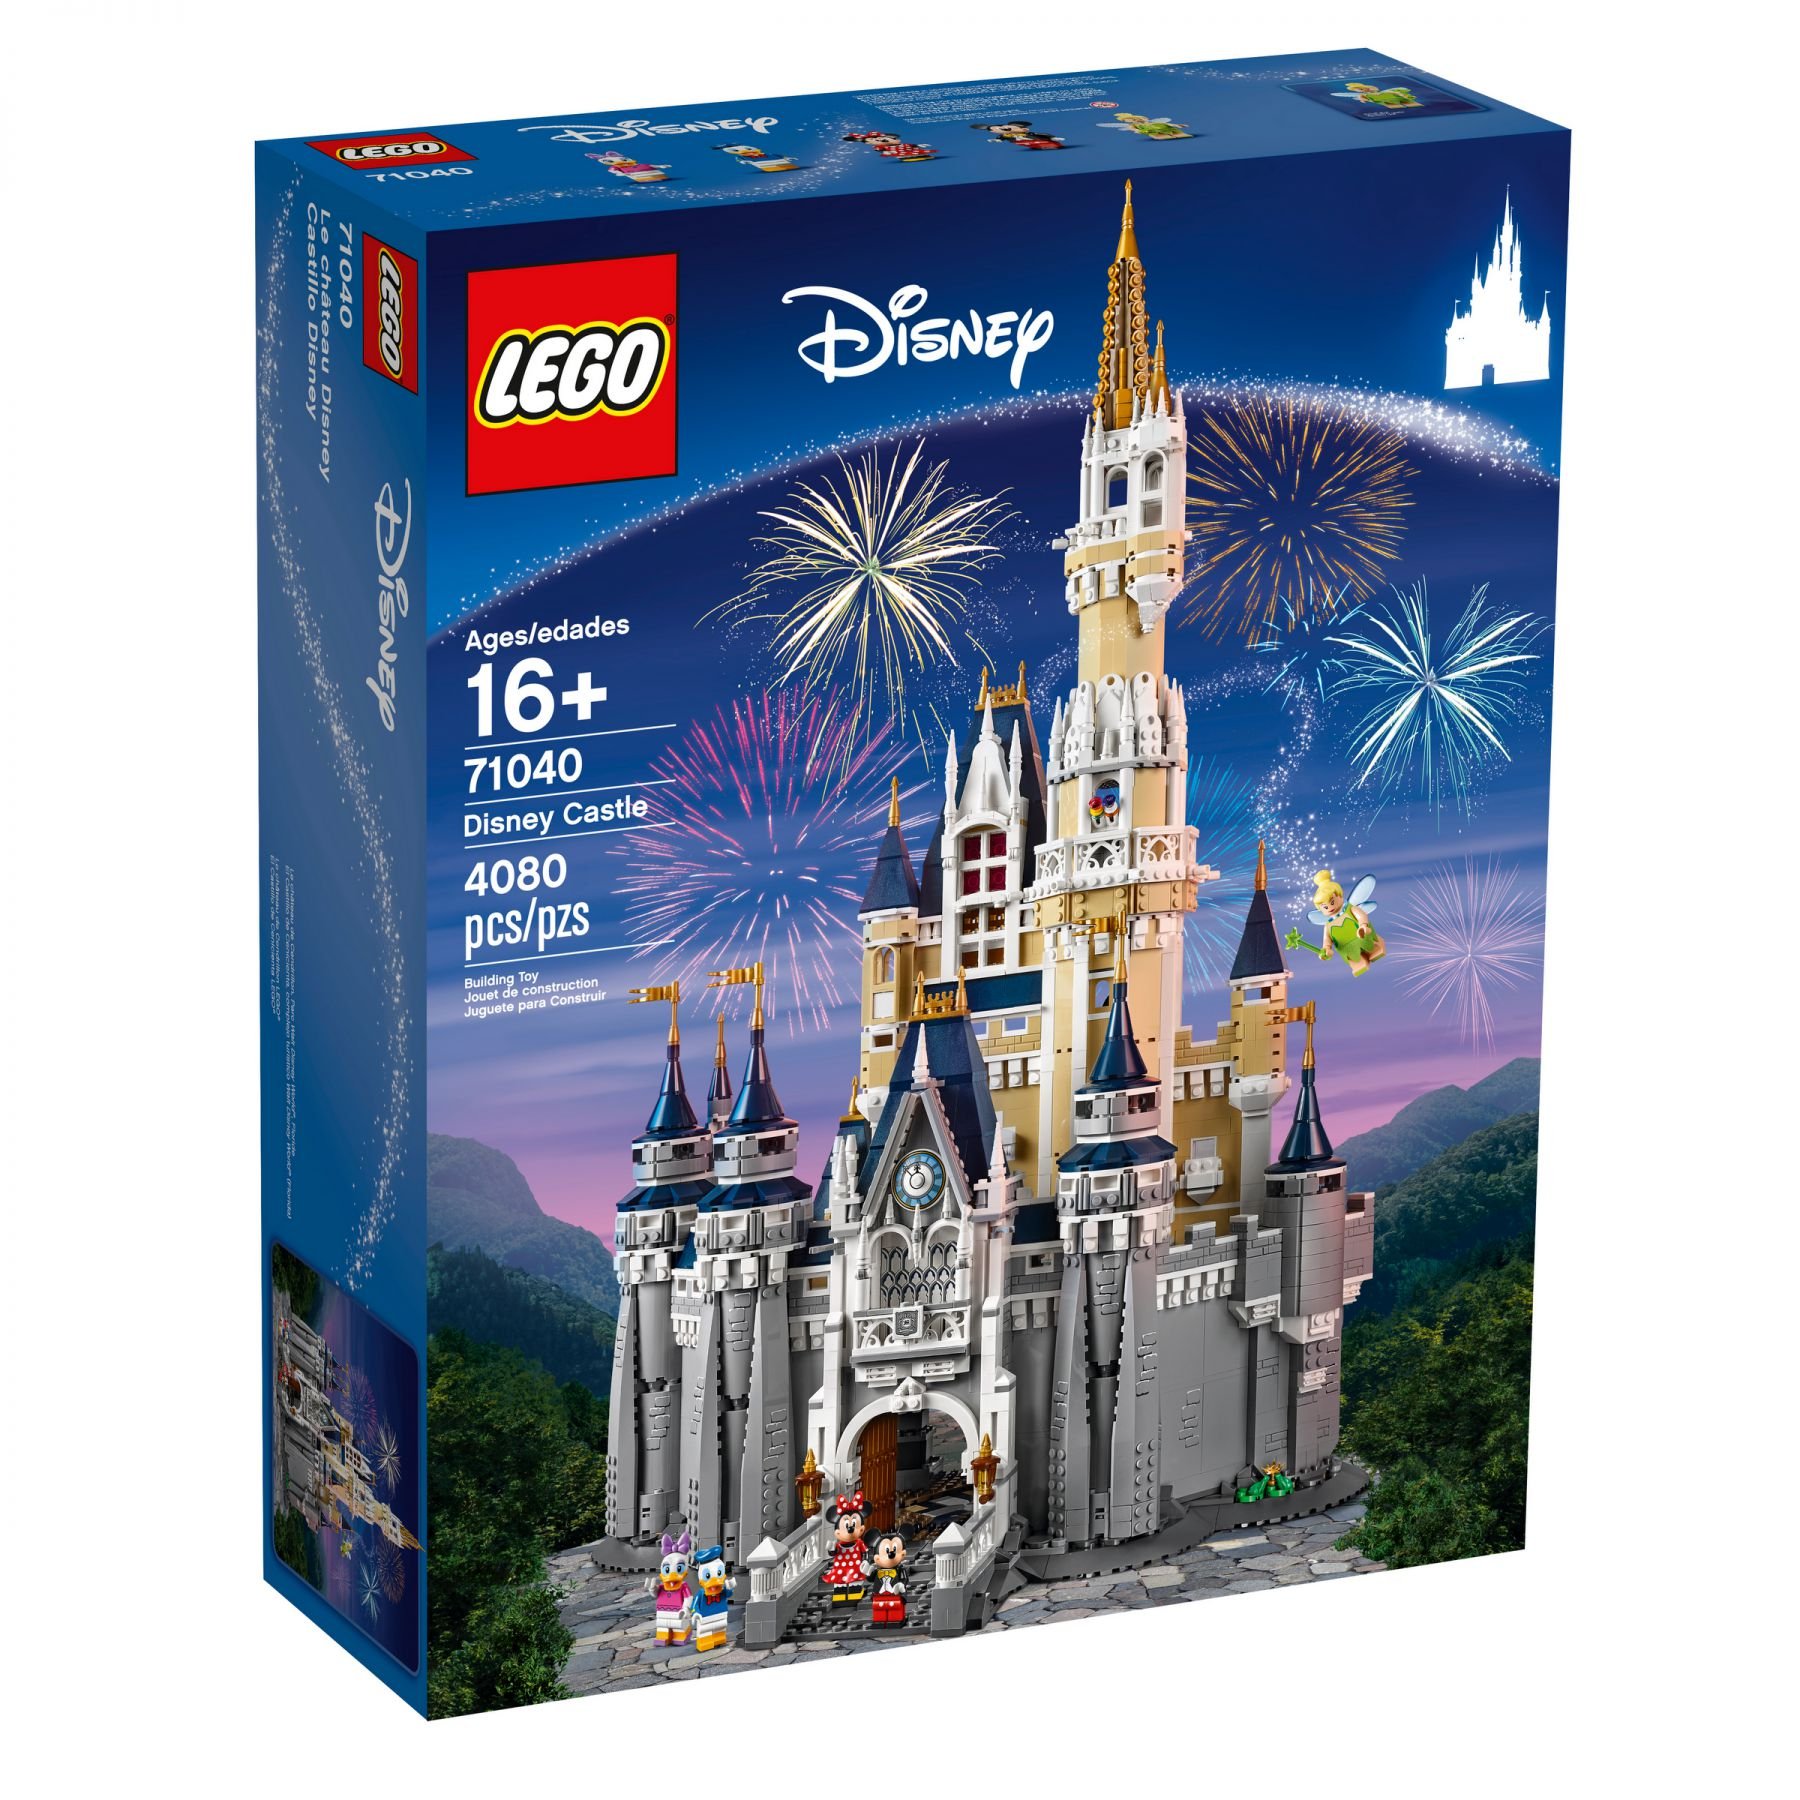 LEGO Advanced Models 71040 Das Disney Schloss LEGO_71040_alt1.jpg